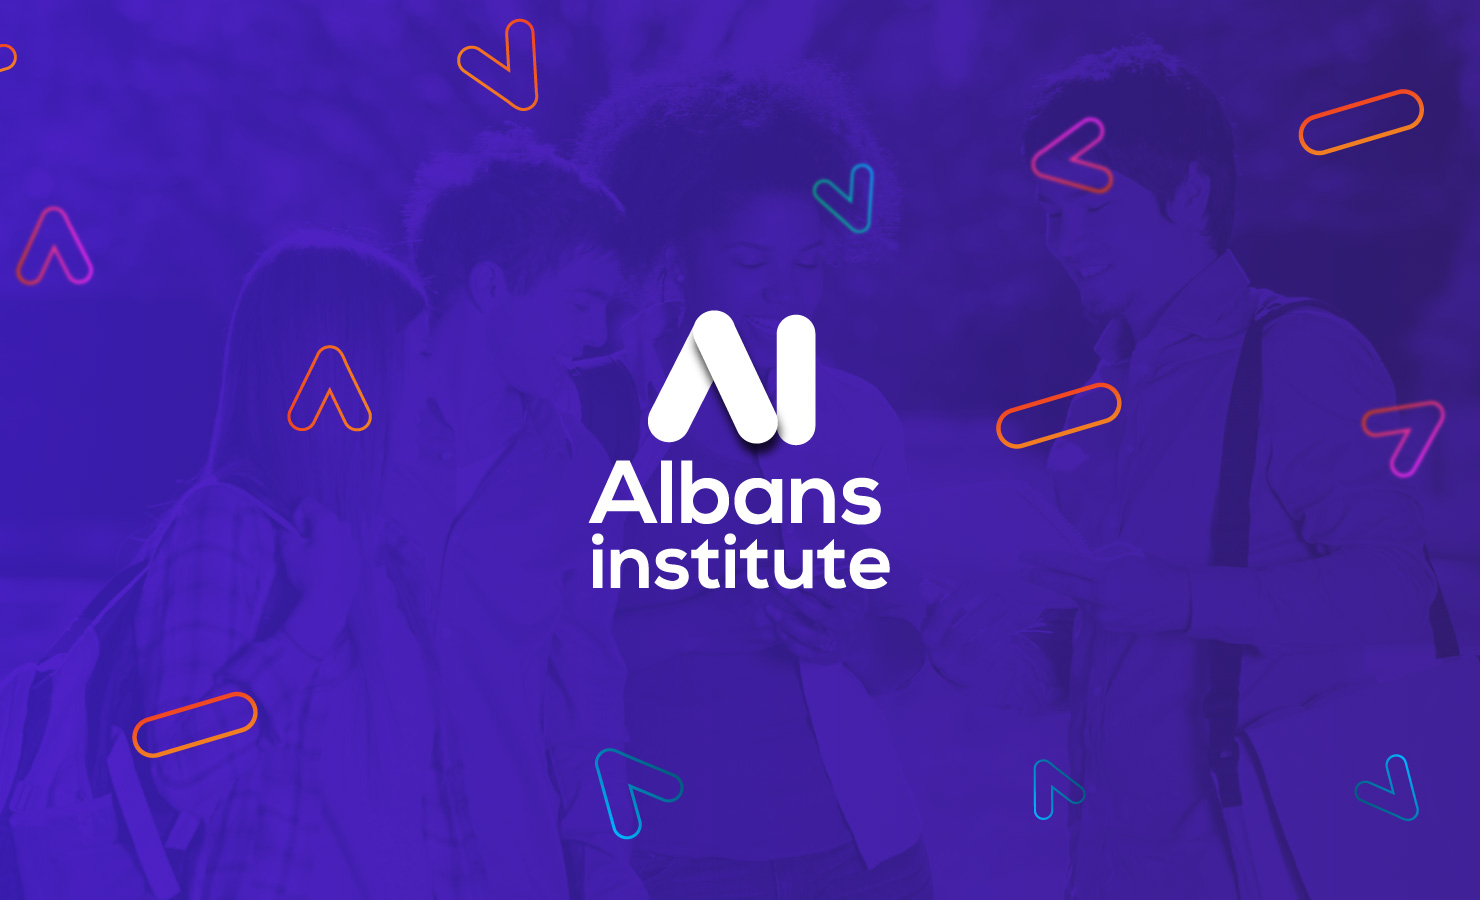 St. Albans college Australia | Branding and website Ui and UX by Devolv Studio